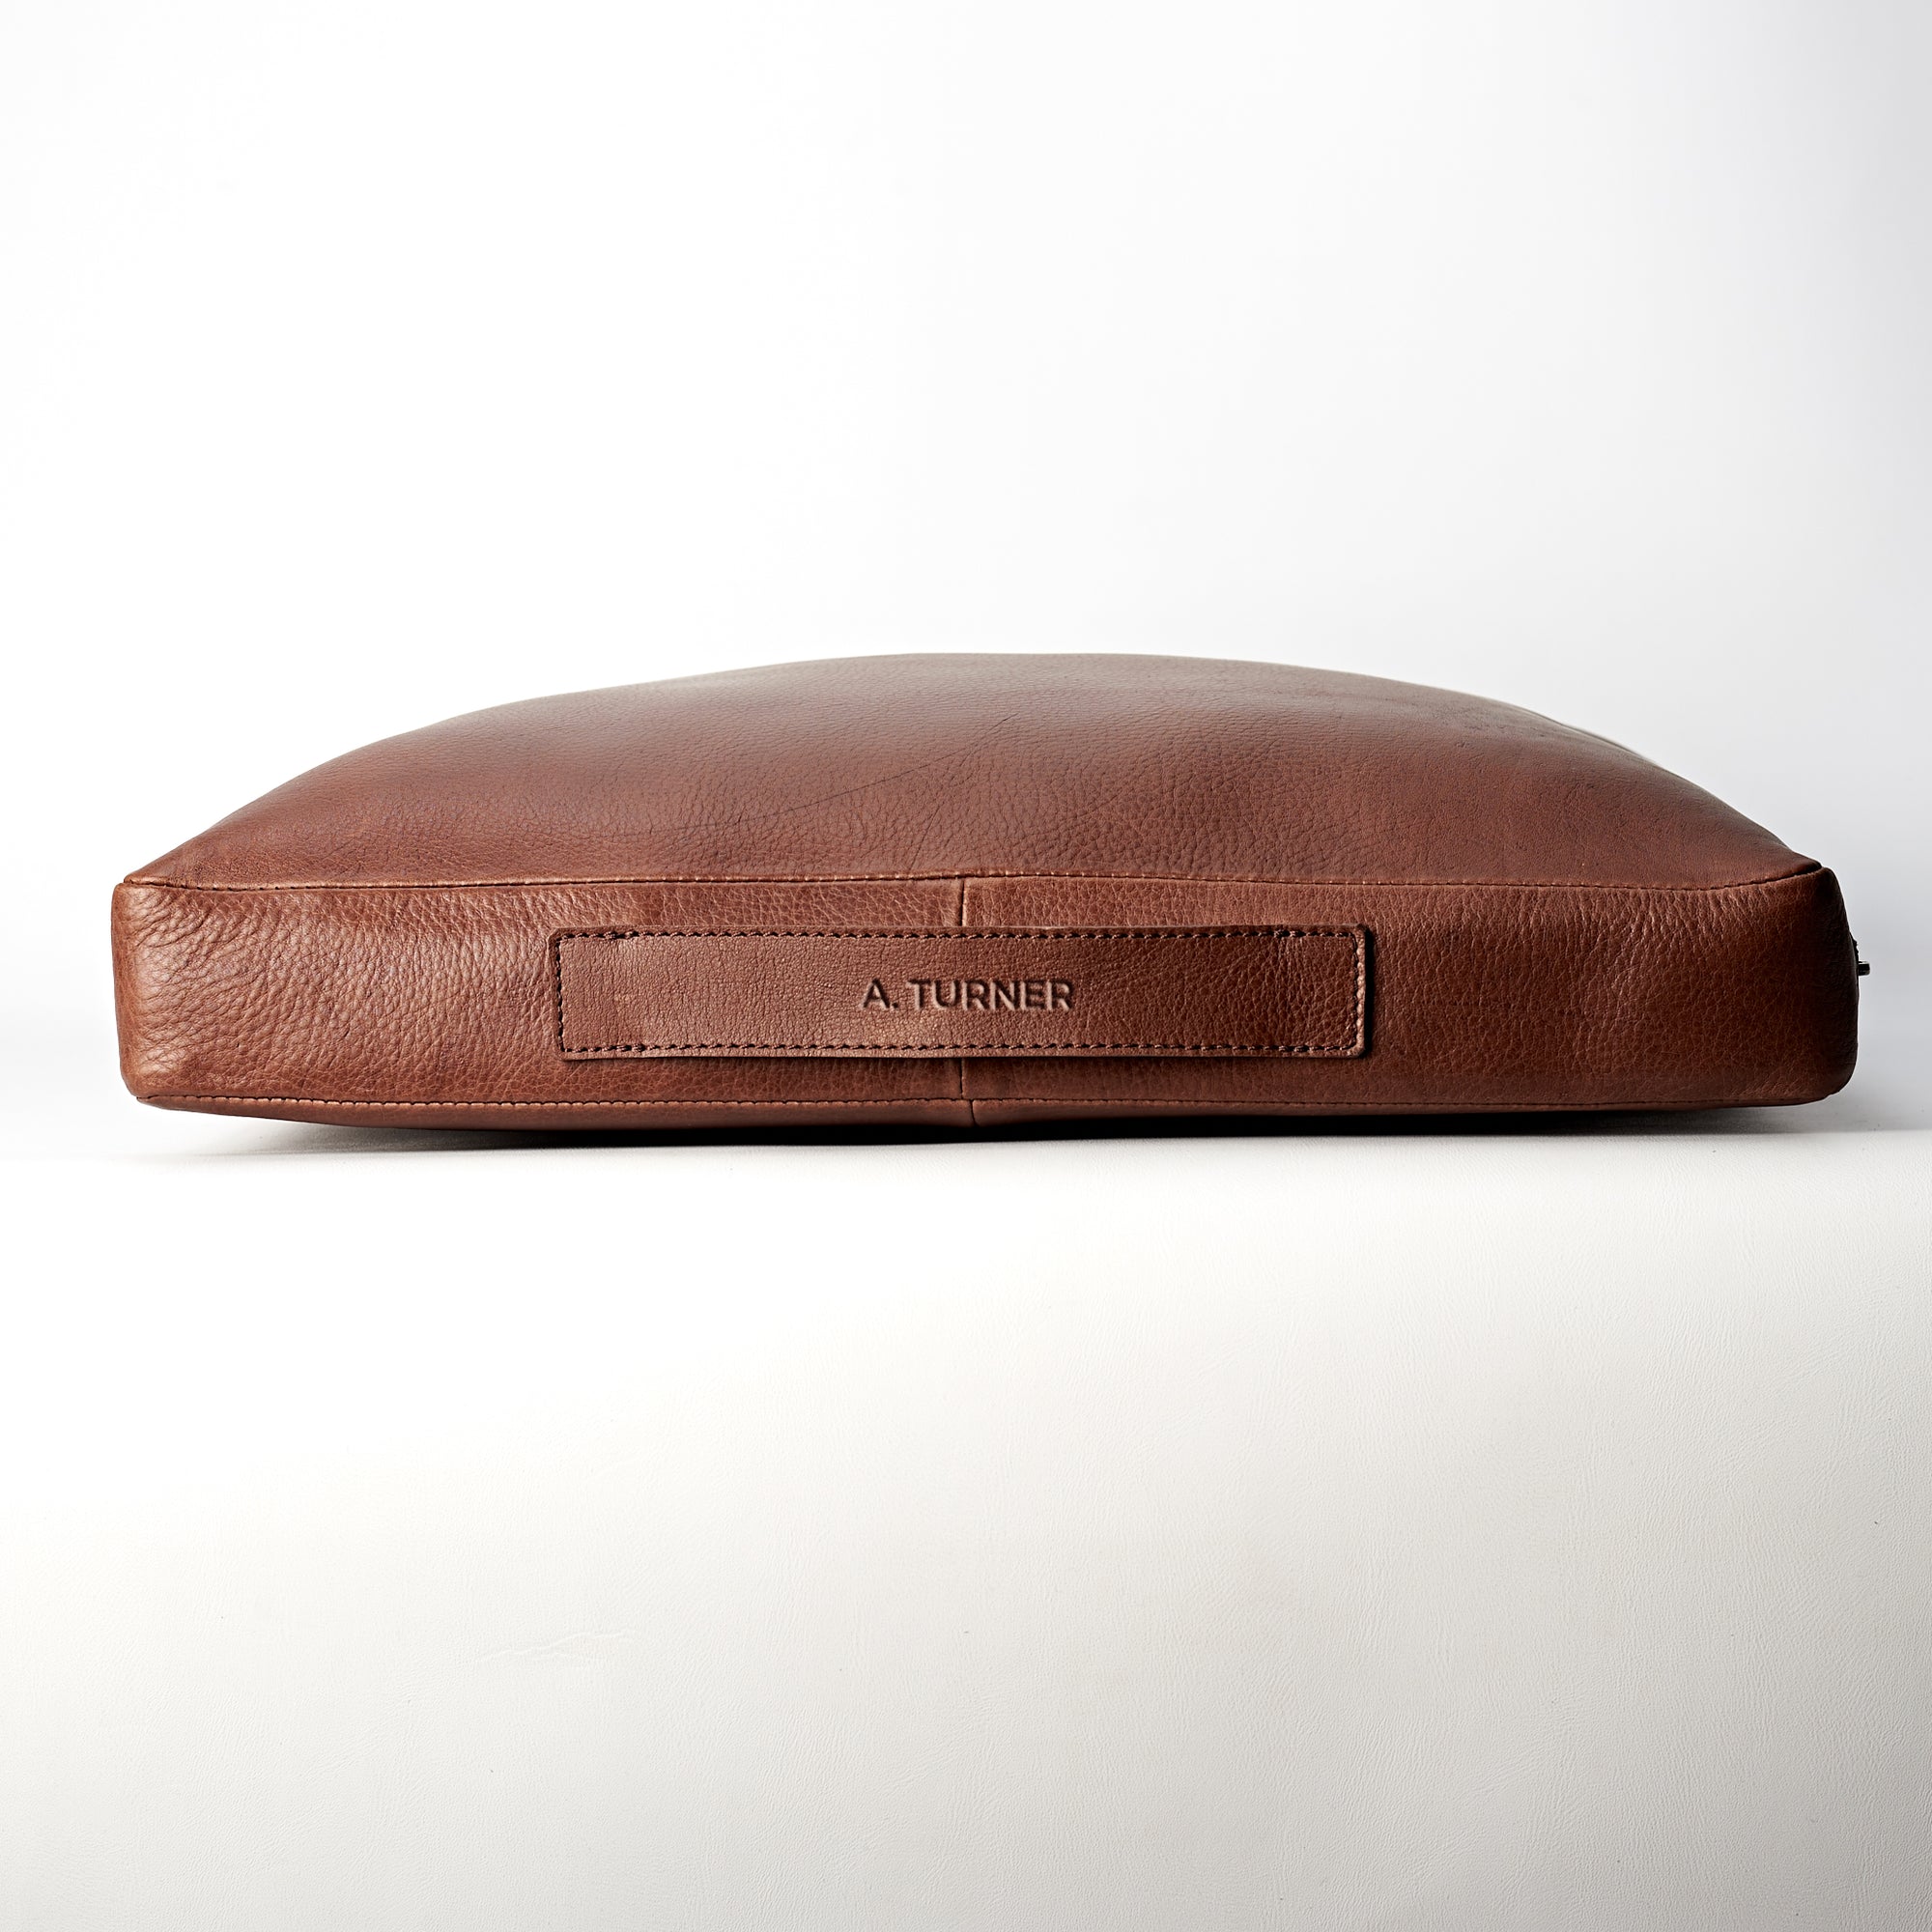 Engraving. travel meditation cushion. Leather meditation cushion, perfect for yoga and meditation. Modern squared zafu